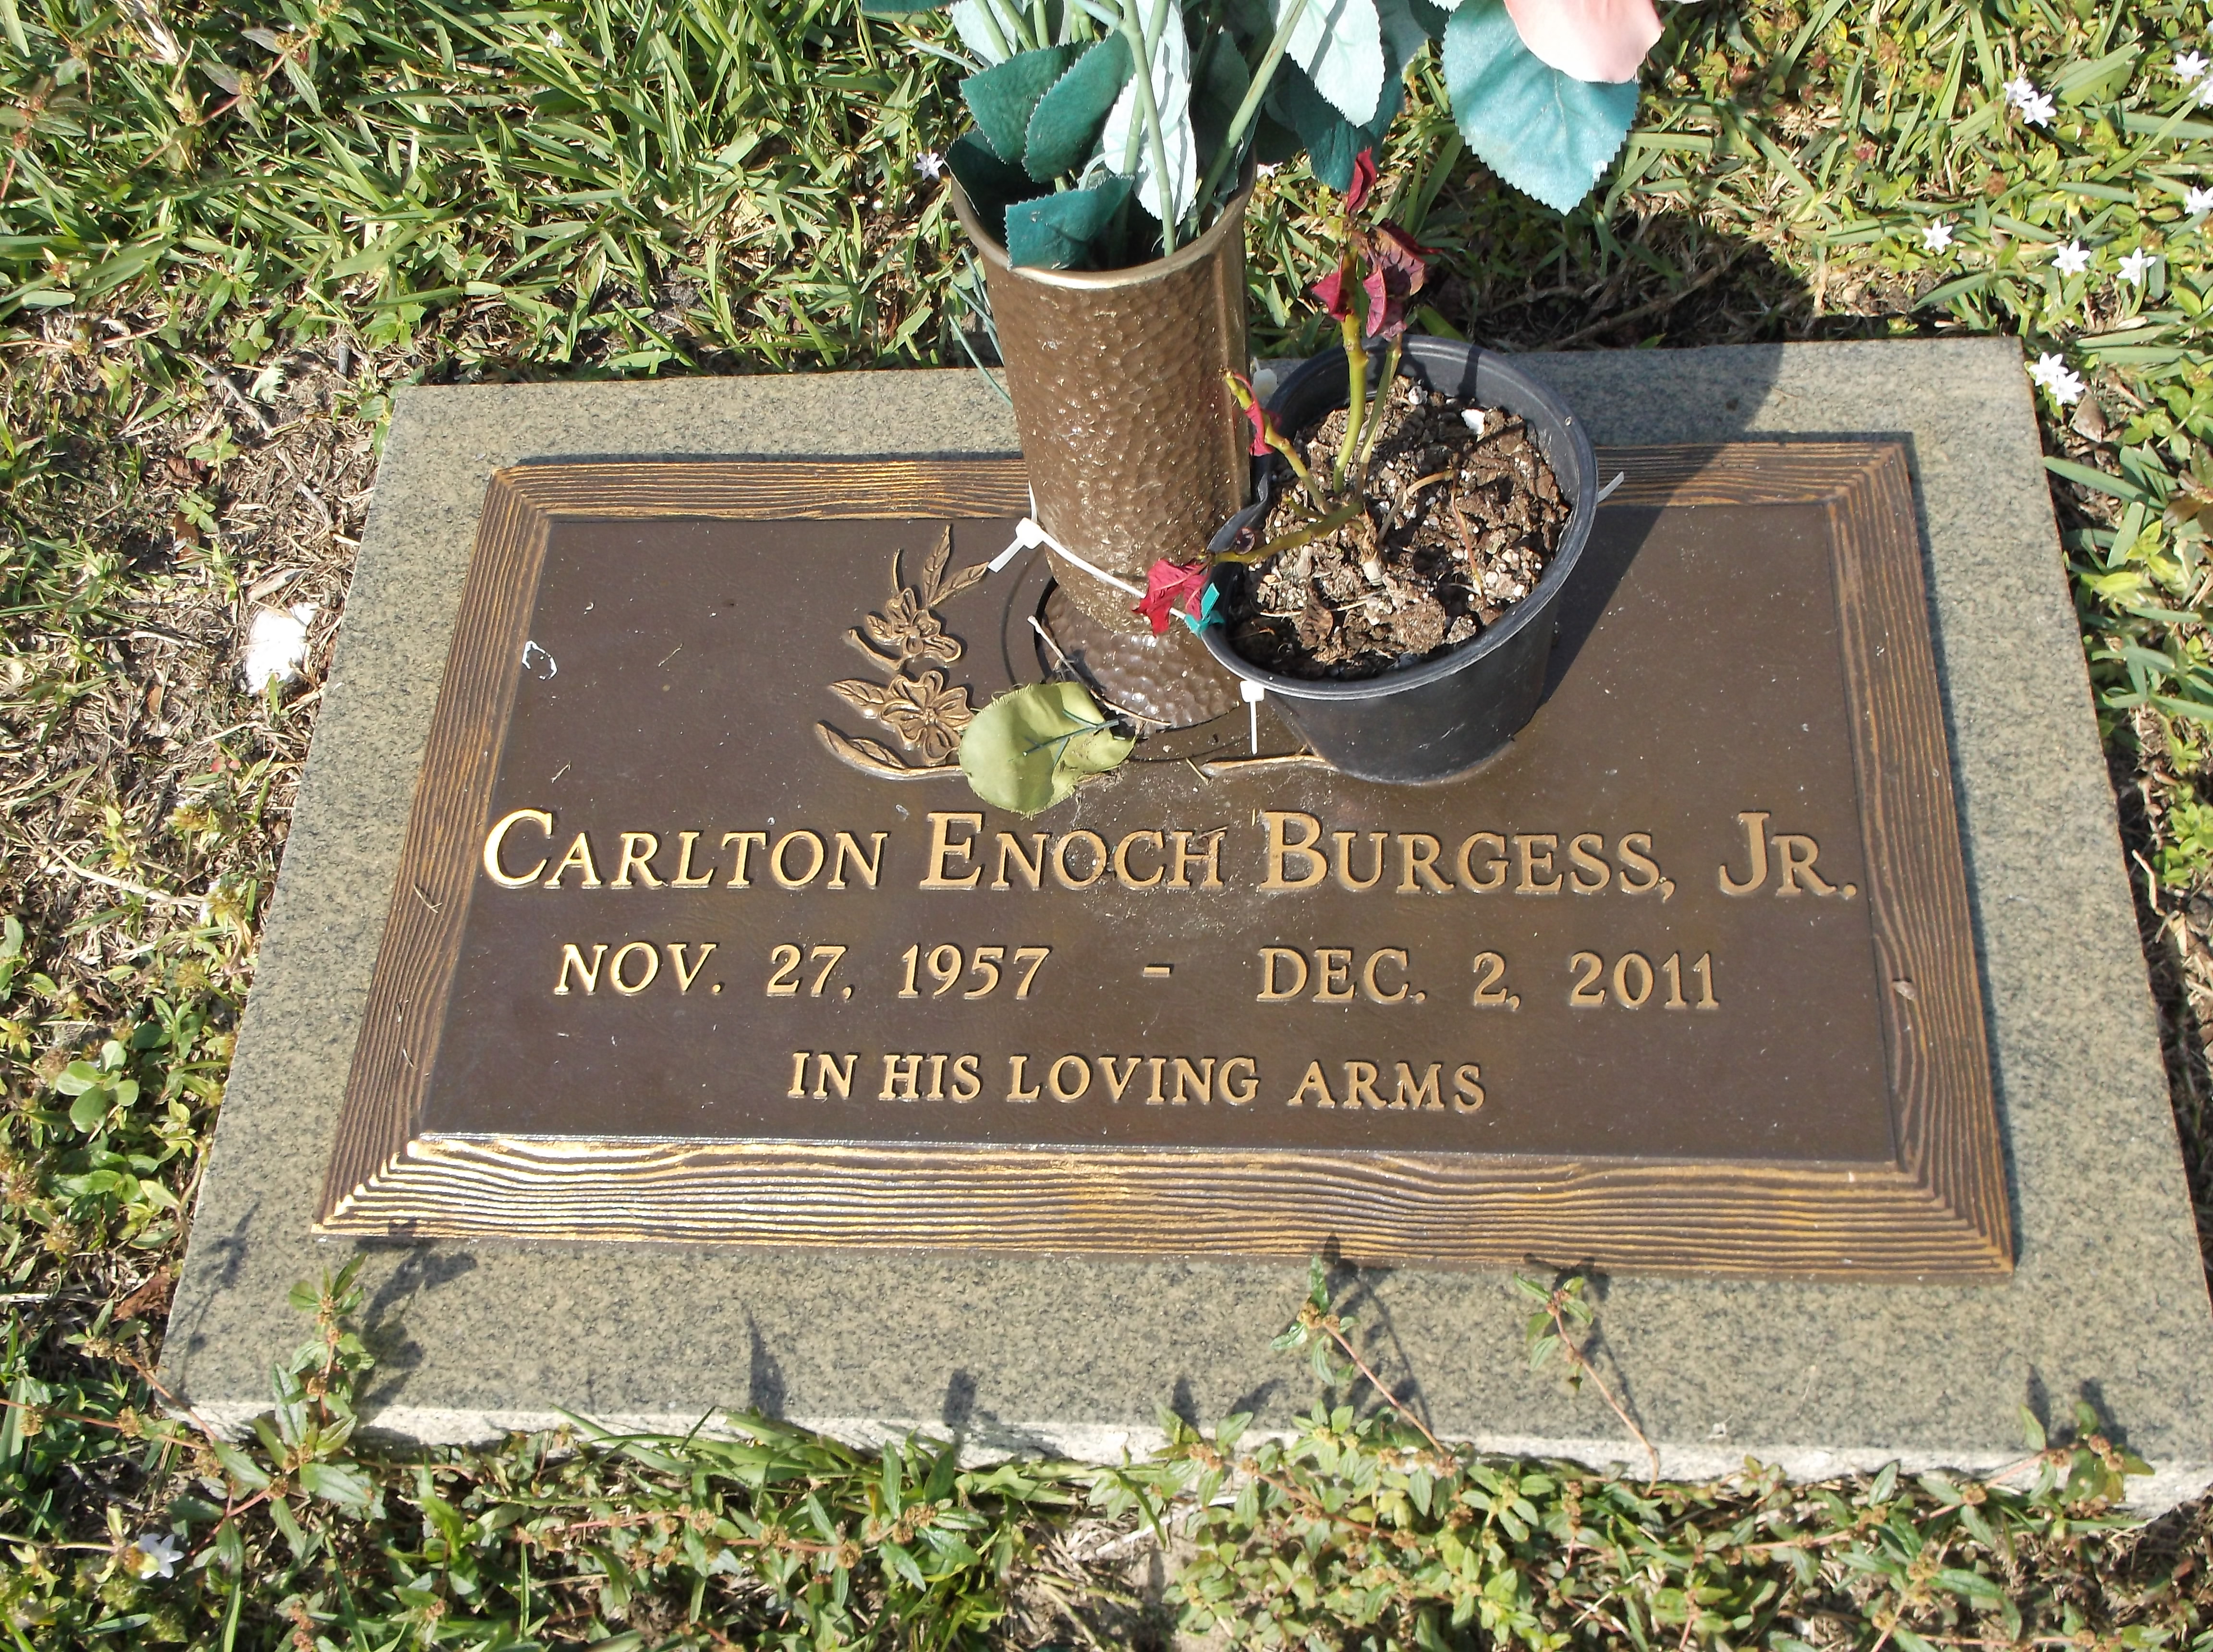 Carlton Enoch Burgess, Jr